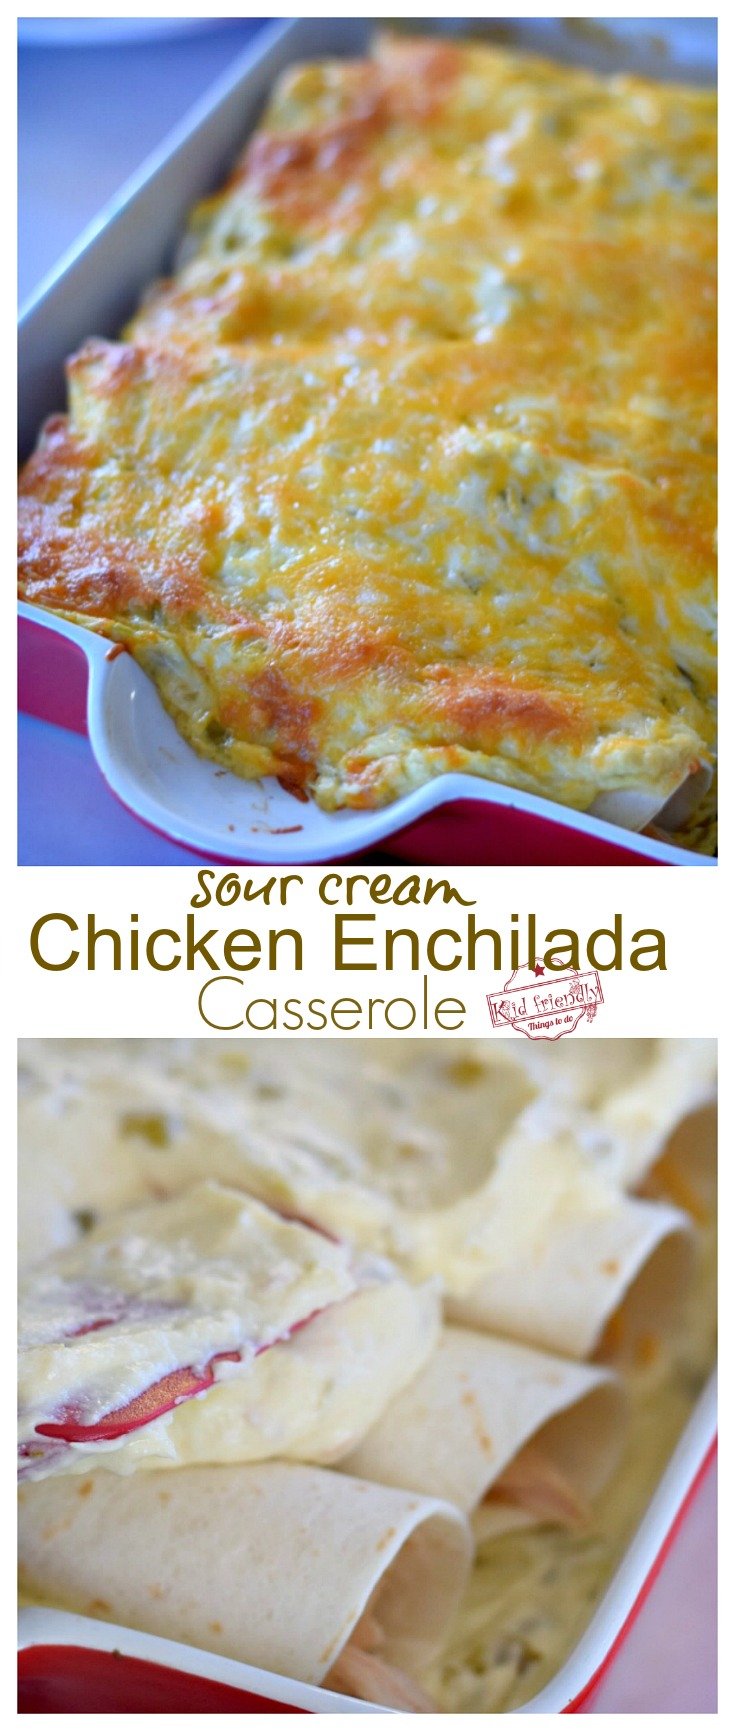 Easy Sour Cream Chicken Enchilada Casserole Recipe - Just Like Mom Used To Make - Delicious, classic casserole the whole family will love . Leftovers are even better! www.kidfriendlythingstodo.com